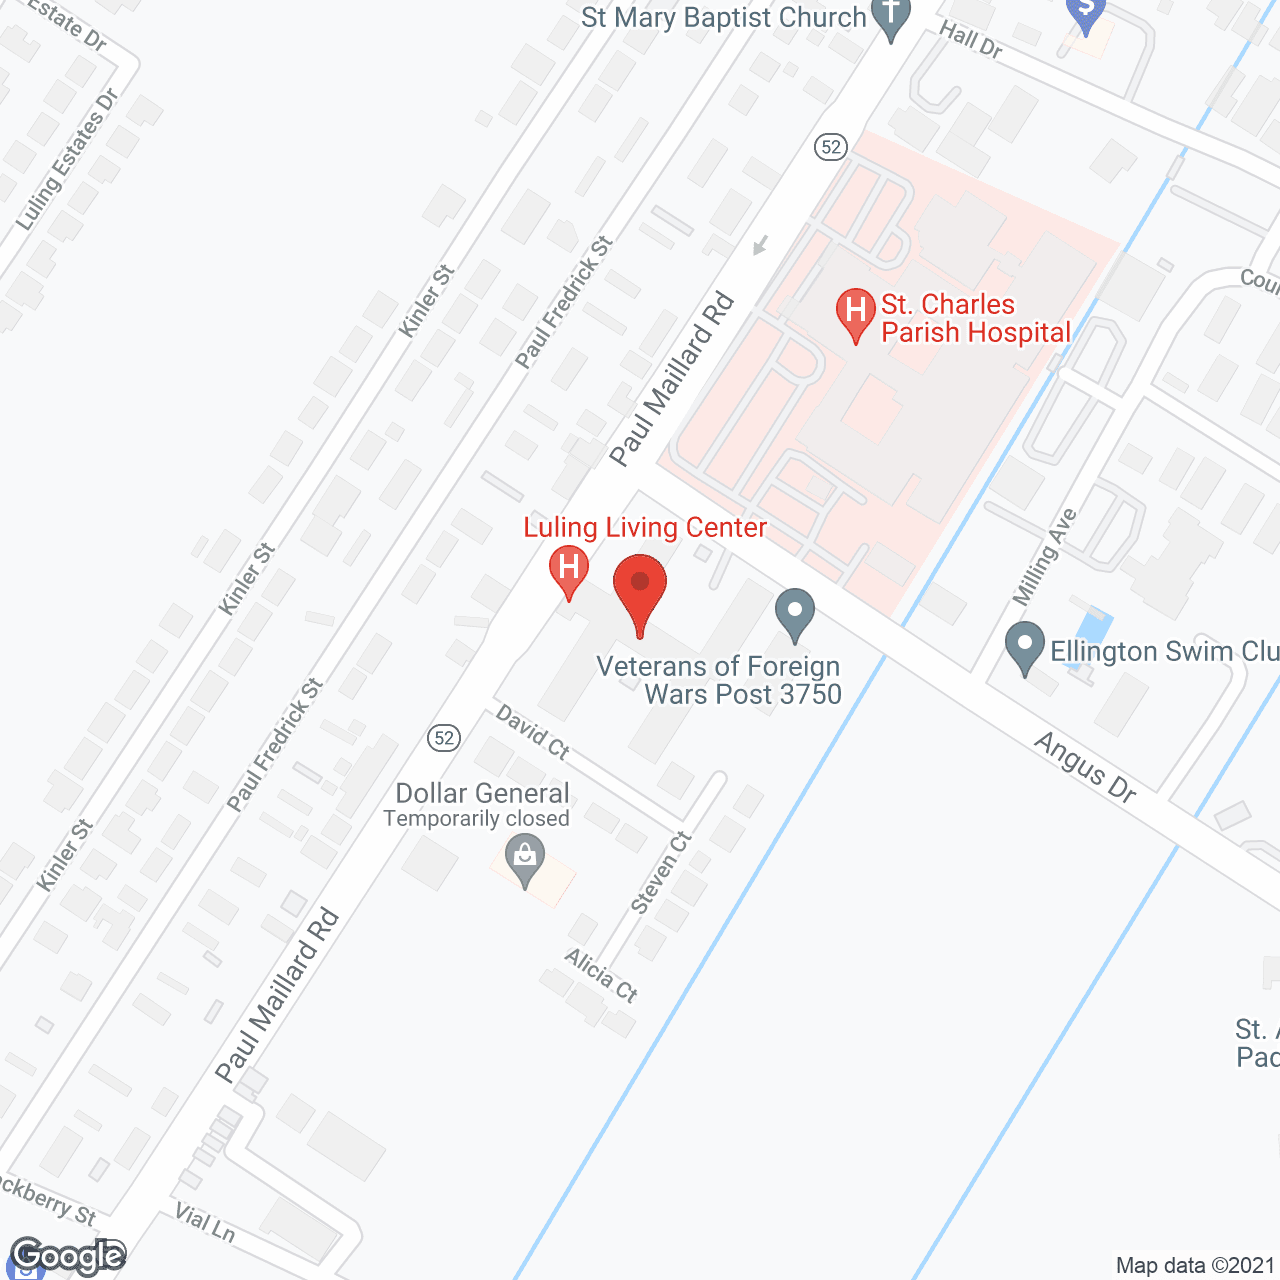 Luling Living Center in google map